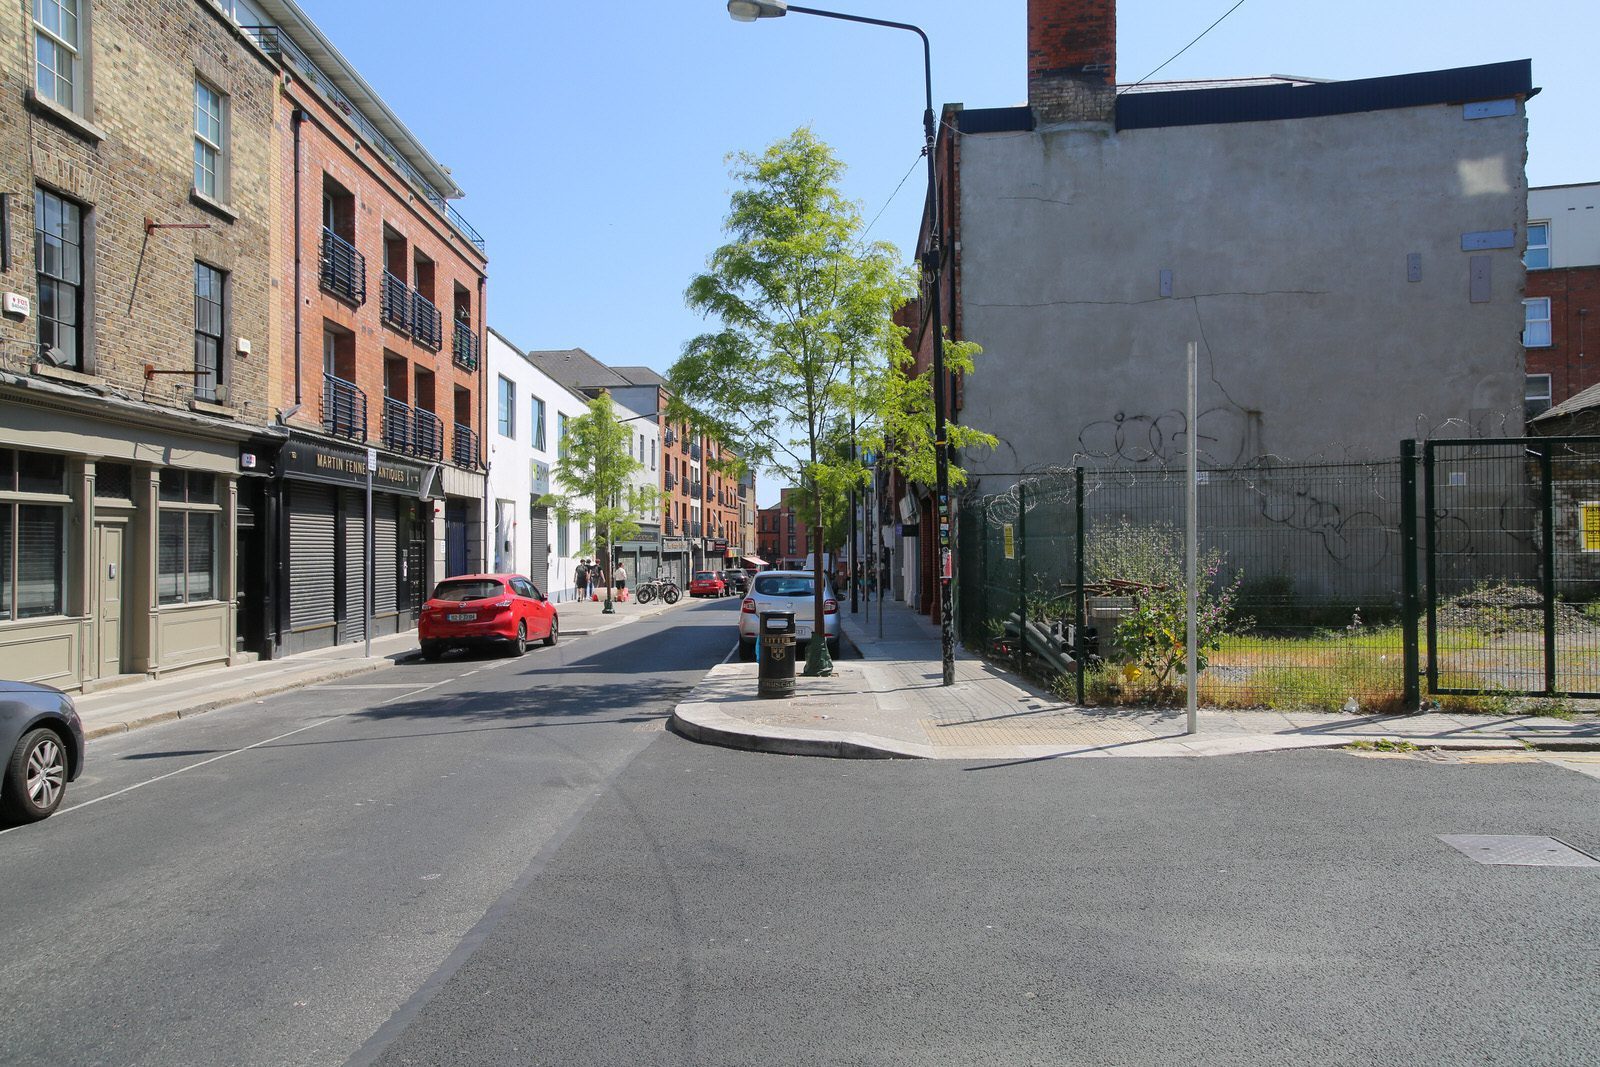 FRANCIS STREET IN DUBLIN [NO LONGER A NEVER ENDING CONSTRUCTION SITE] 002